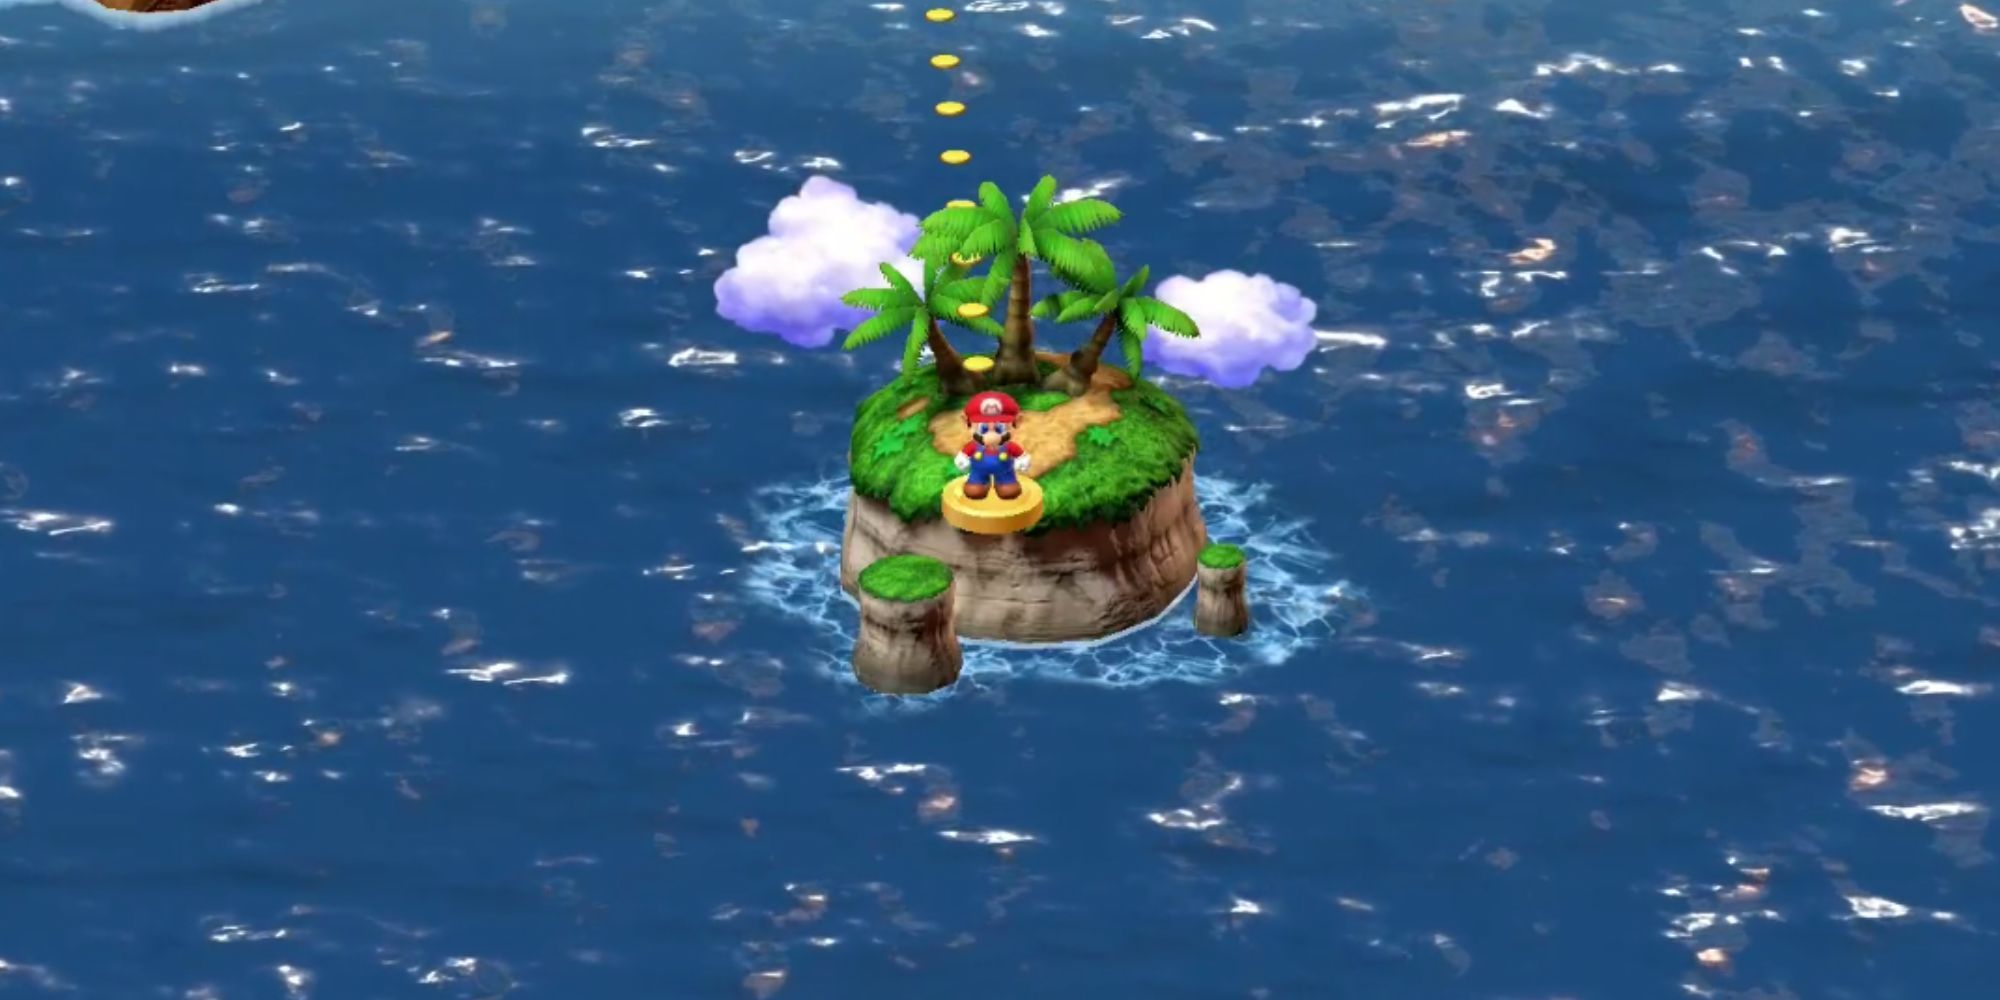 Mario standing on Yo'sters Isle in Super Mario RPG.